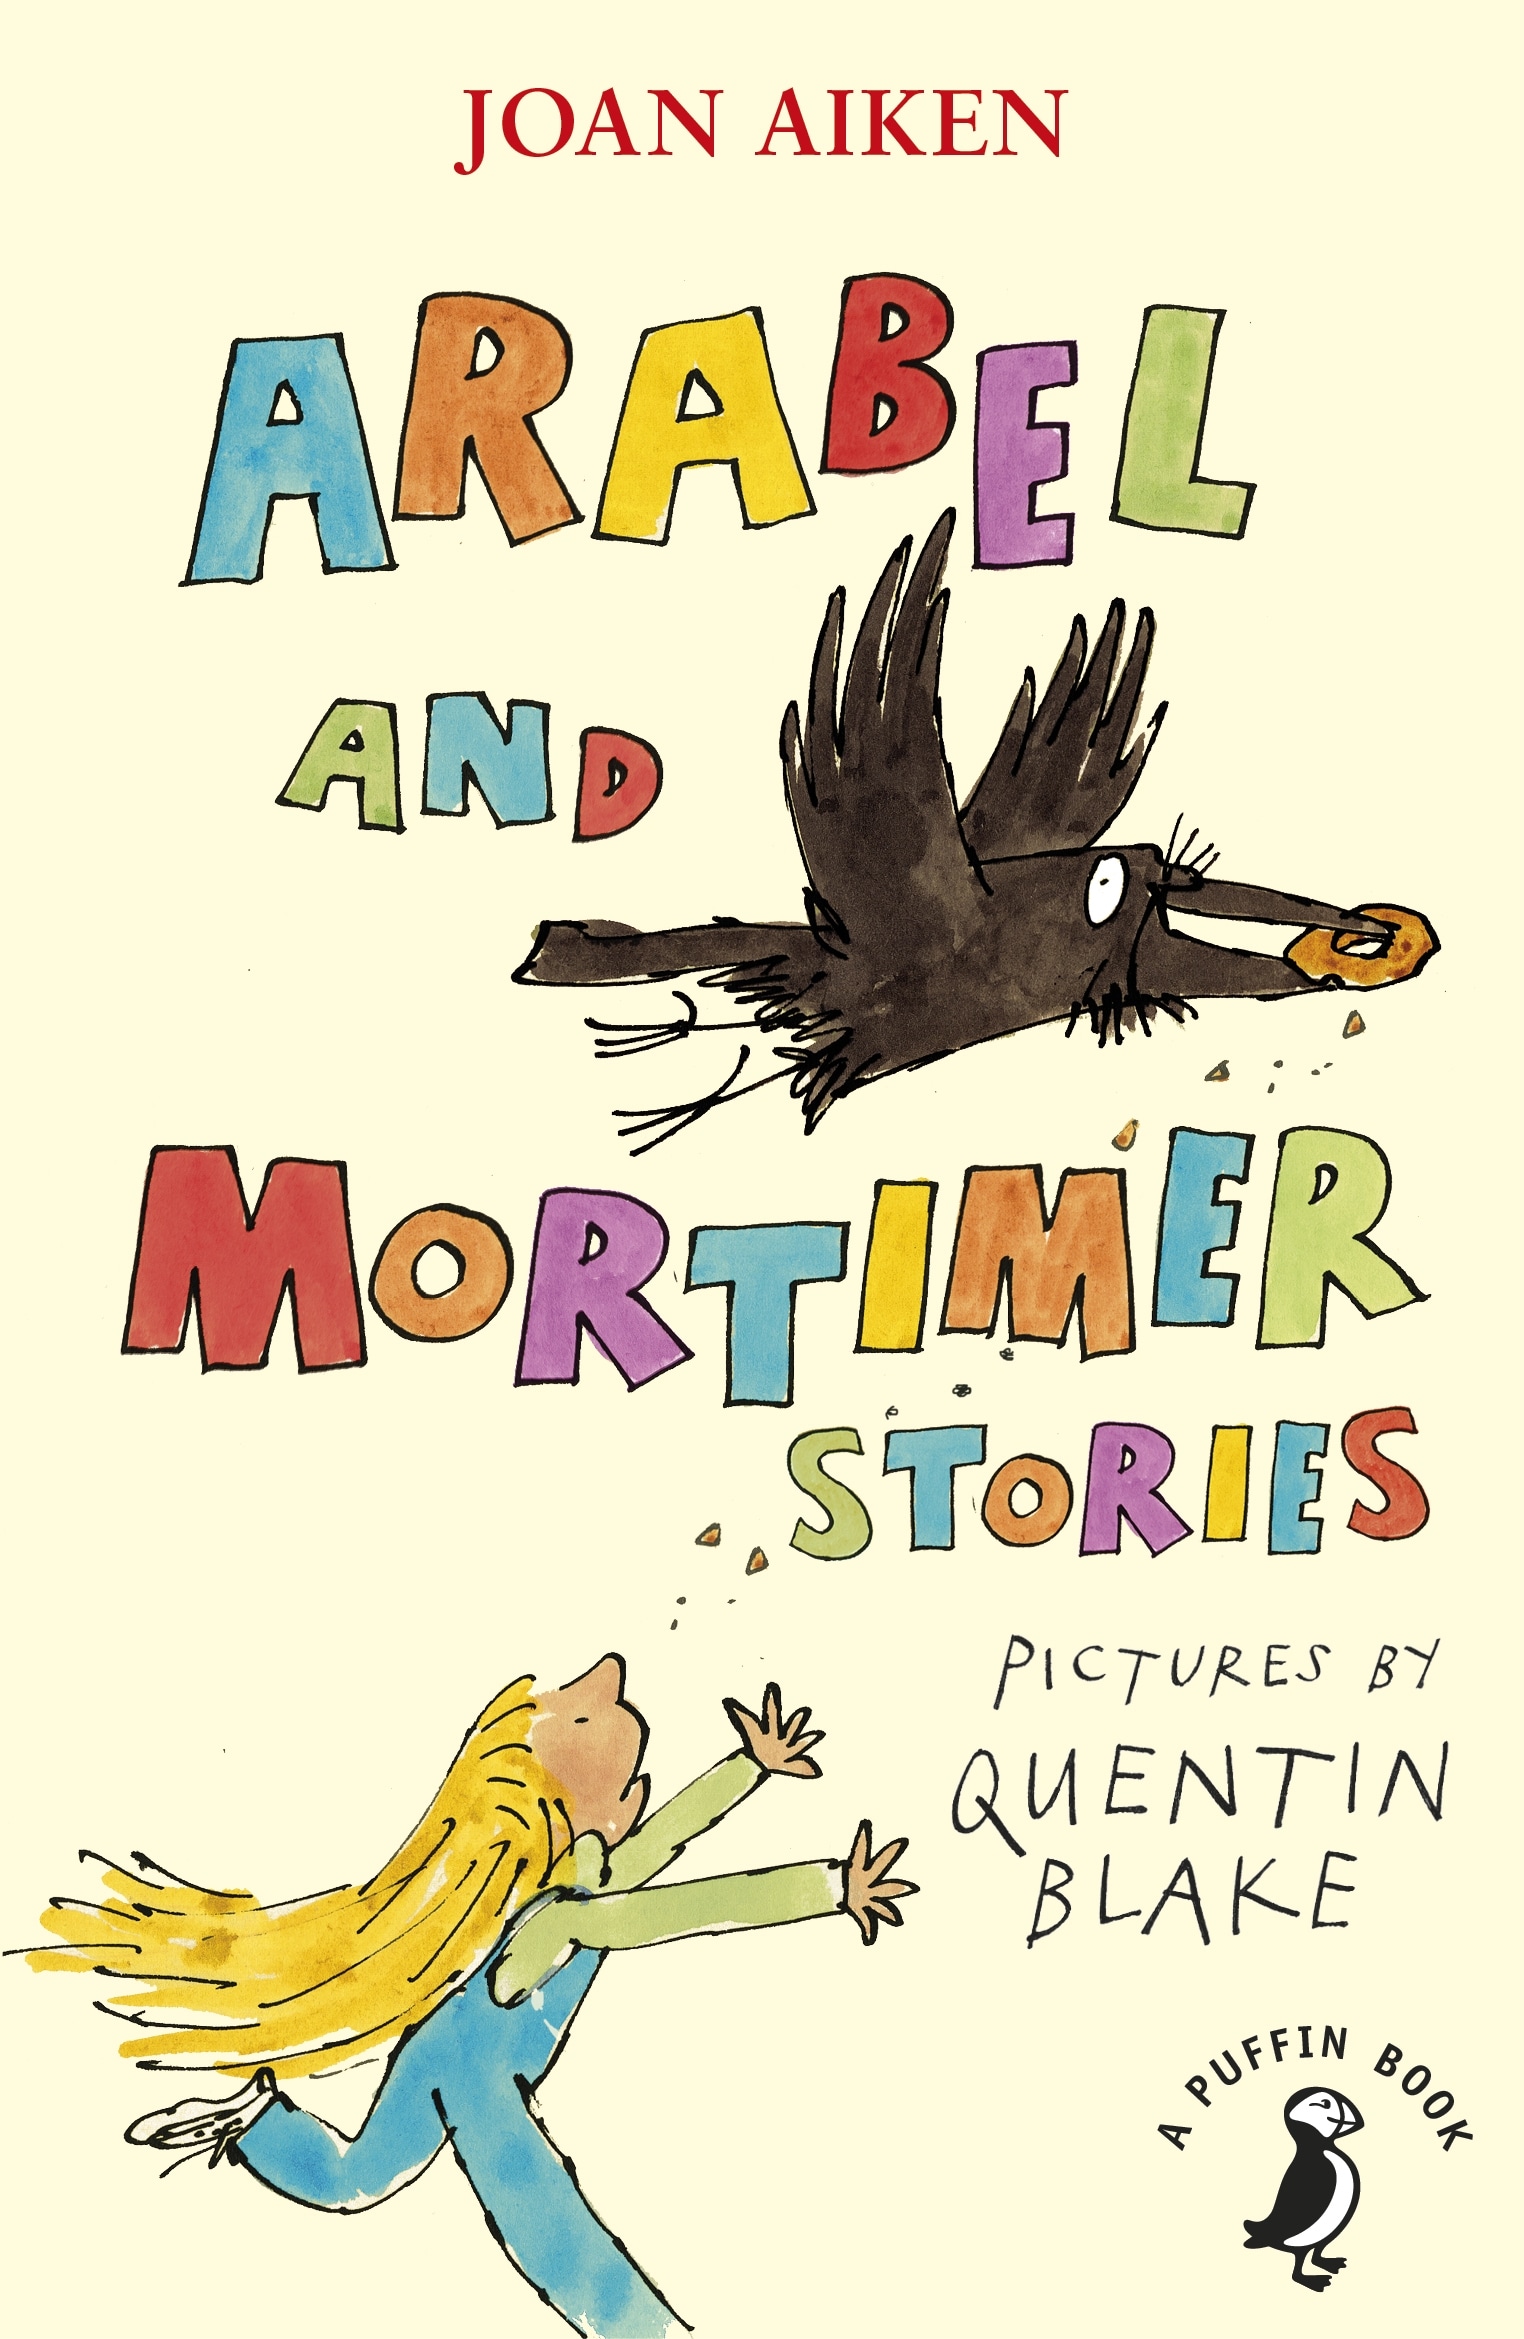 Book “Arabel and Mortimer Stories” by Joan Aiken — June 6, 2019